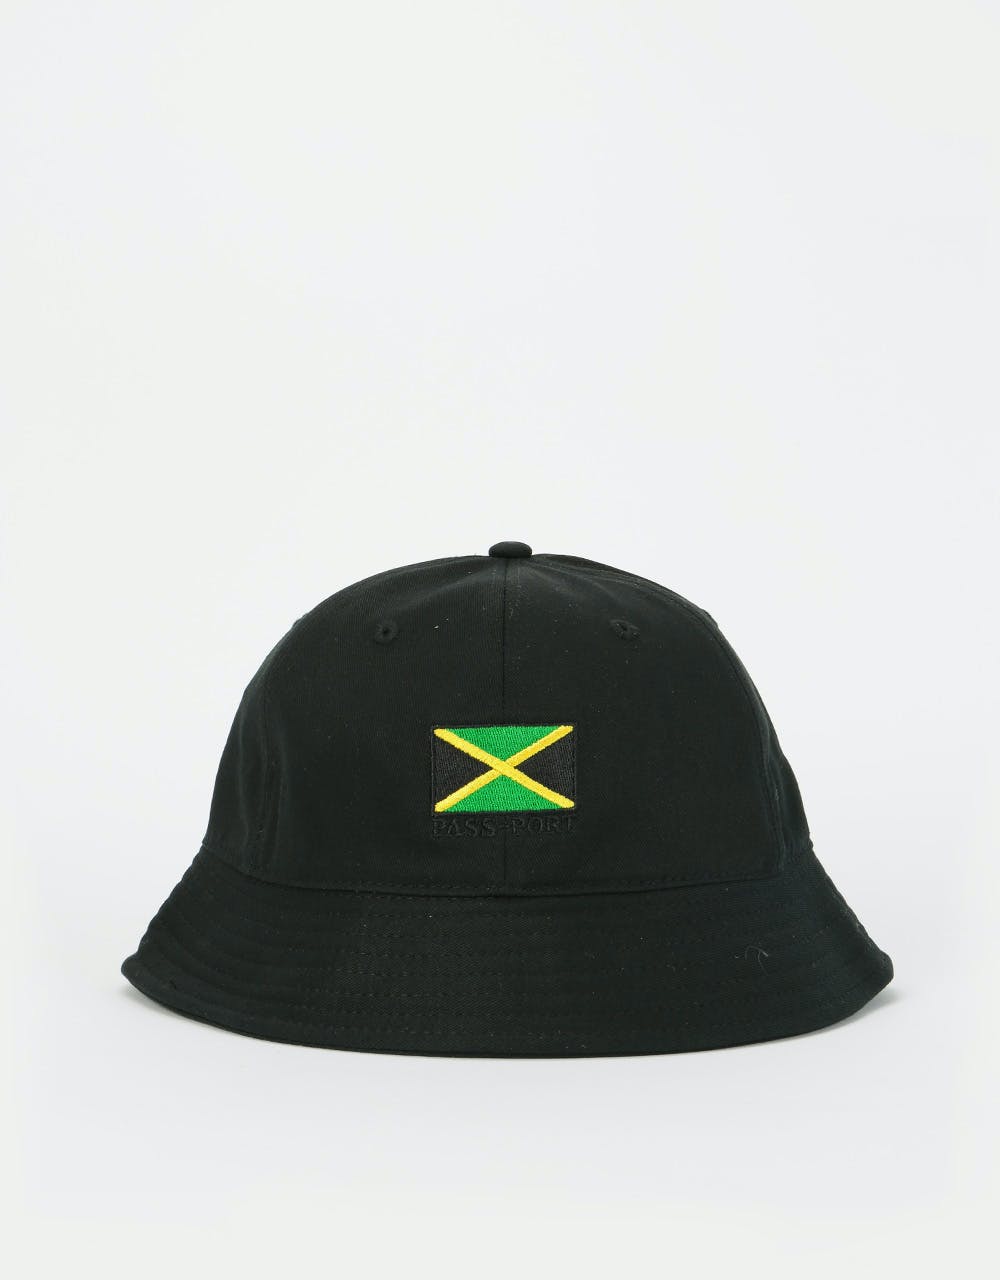 Pass Port Jamaica Twill Bucket Hat - Black